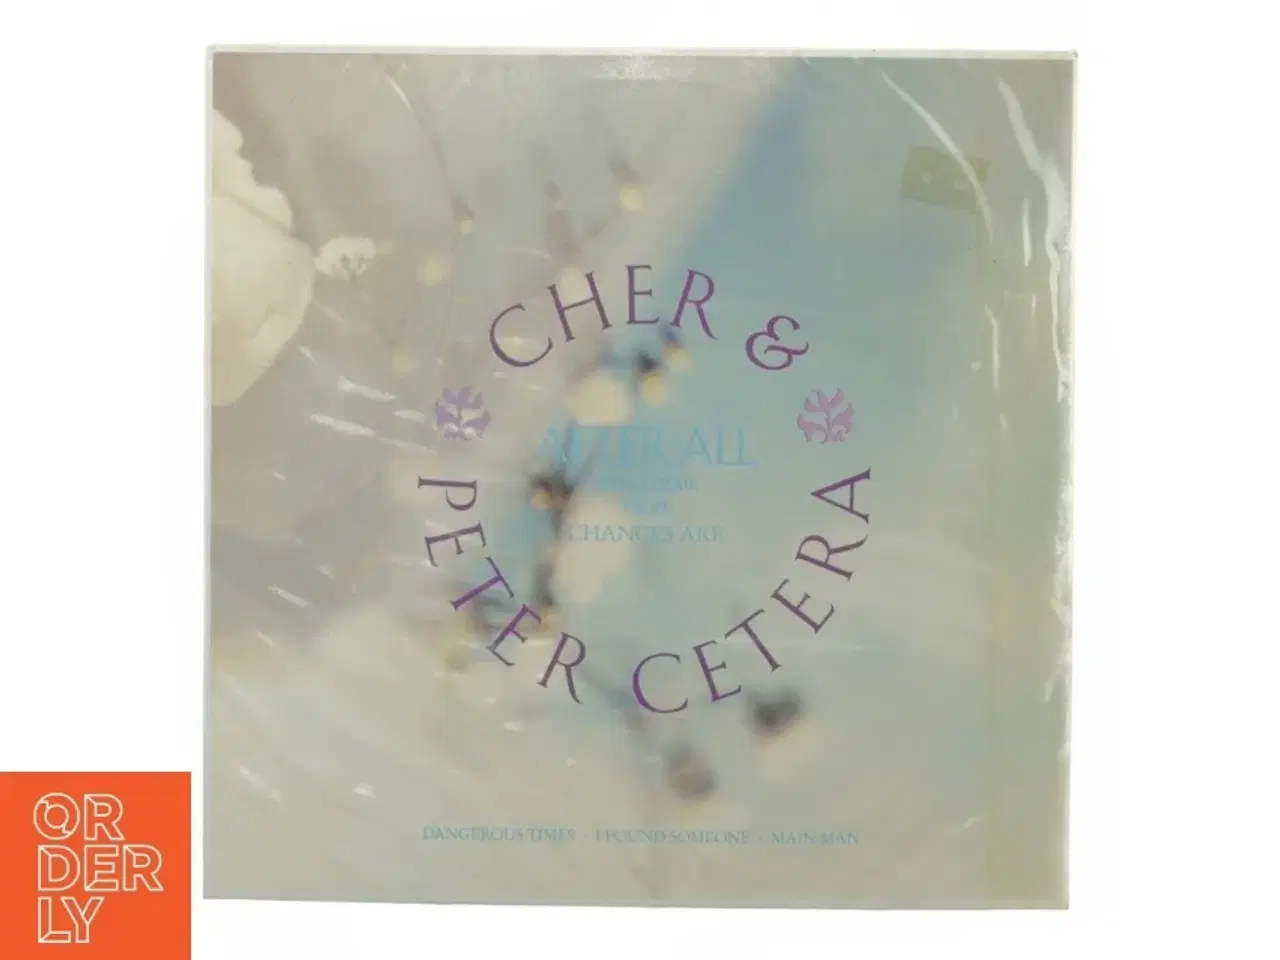 Billede 1 - Cher & Peter Cetera, afterall fra Geffen Records (str. 30 cm)